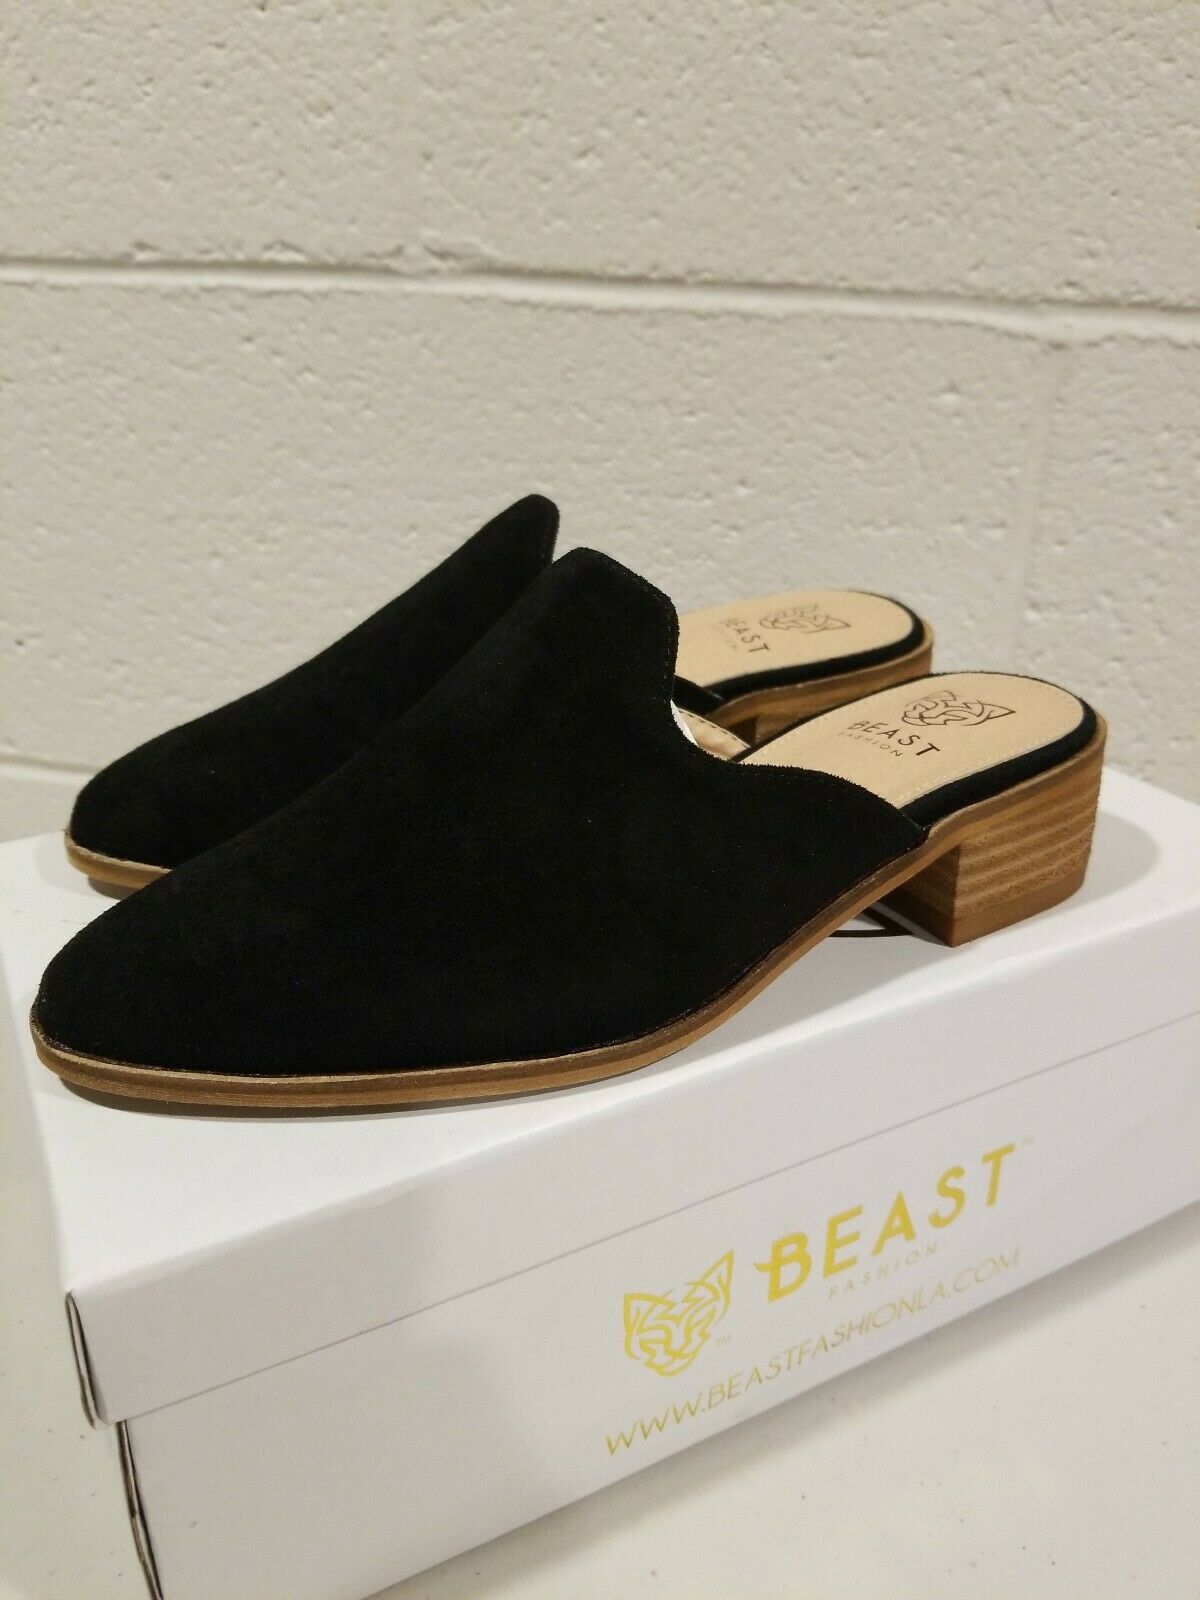 Beast Fashion Norway Black Slip On Mules Shoes Women Size 5.5